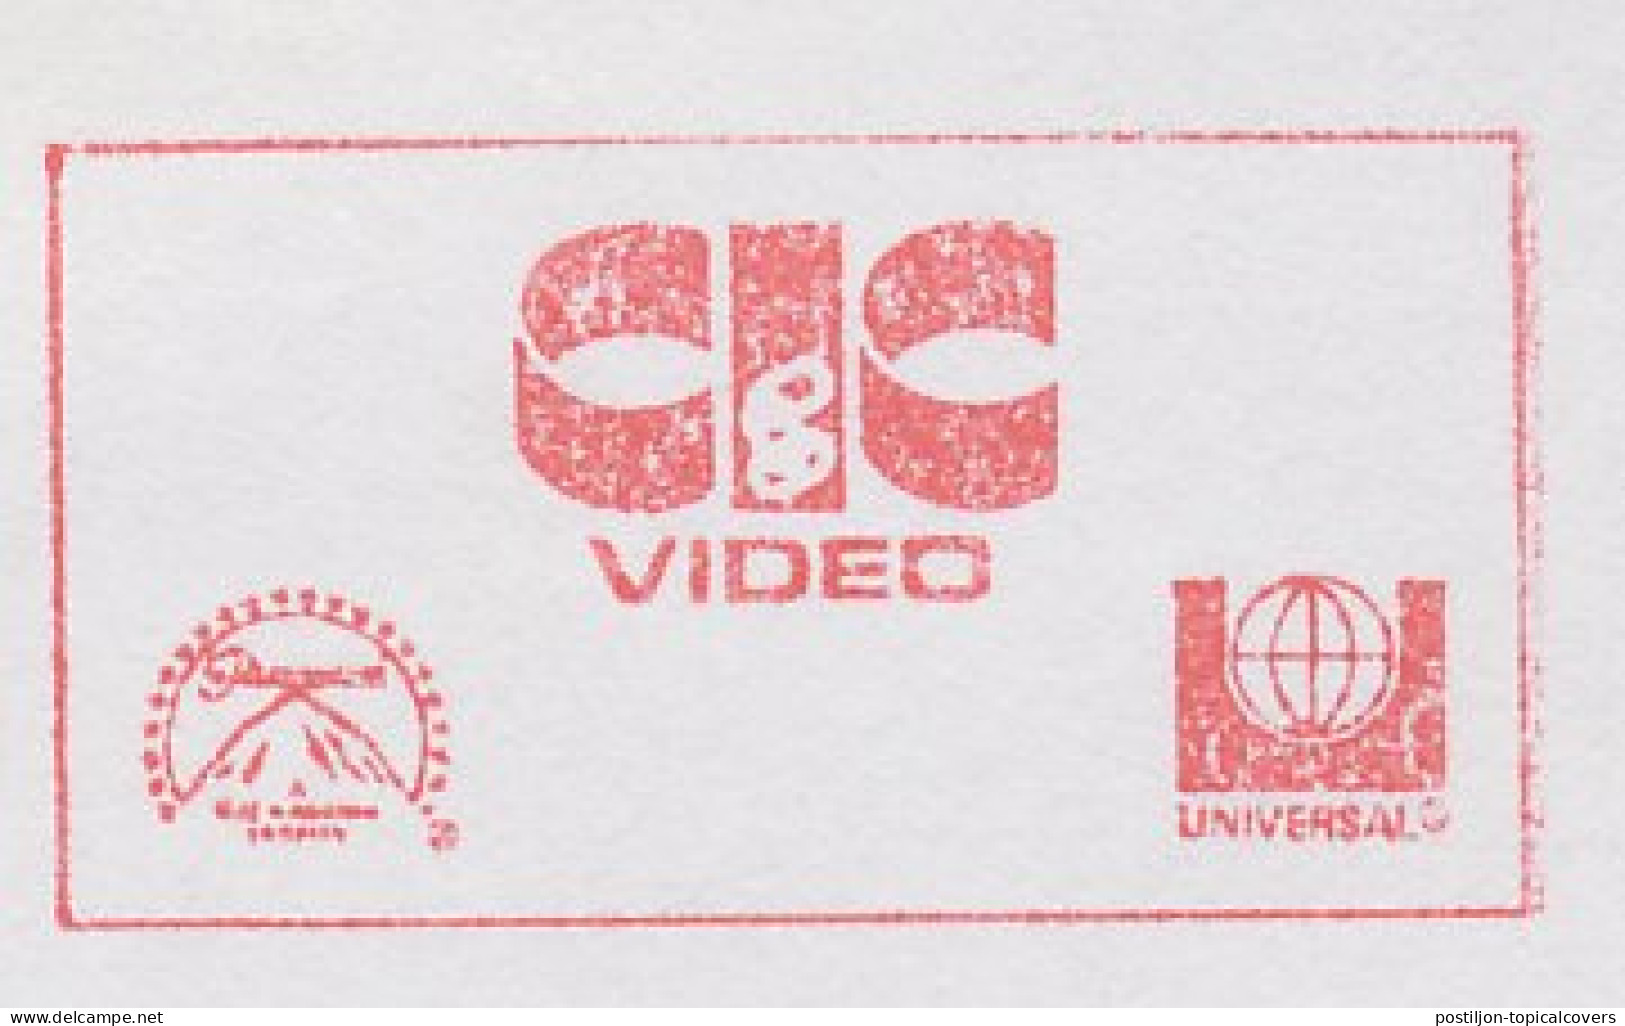 Meter Cut Netherlands 1992 Video - Universal - Paramount - Cinéma